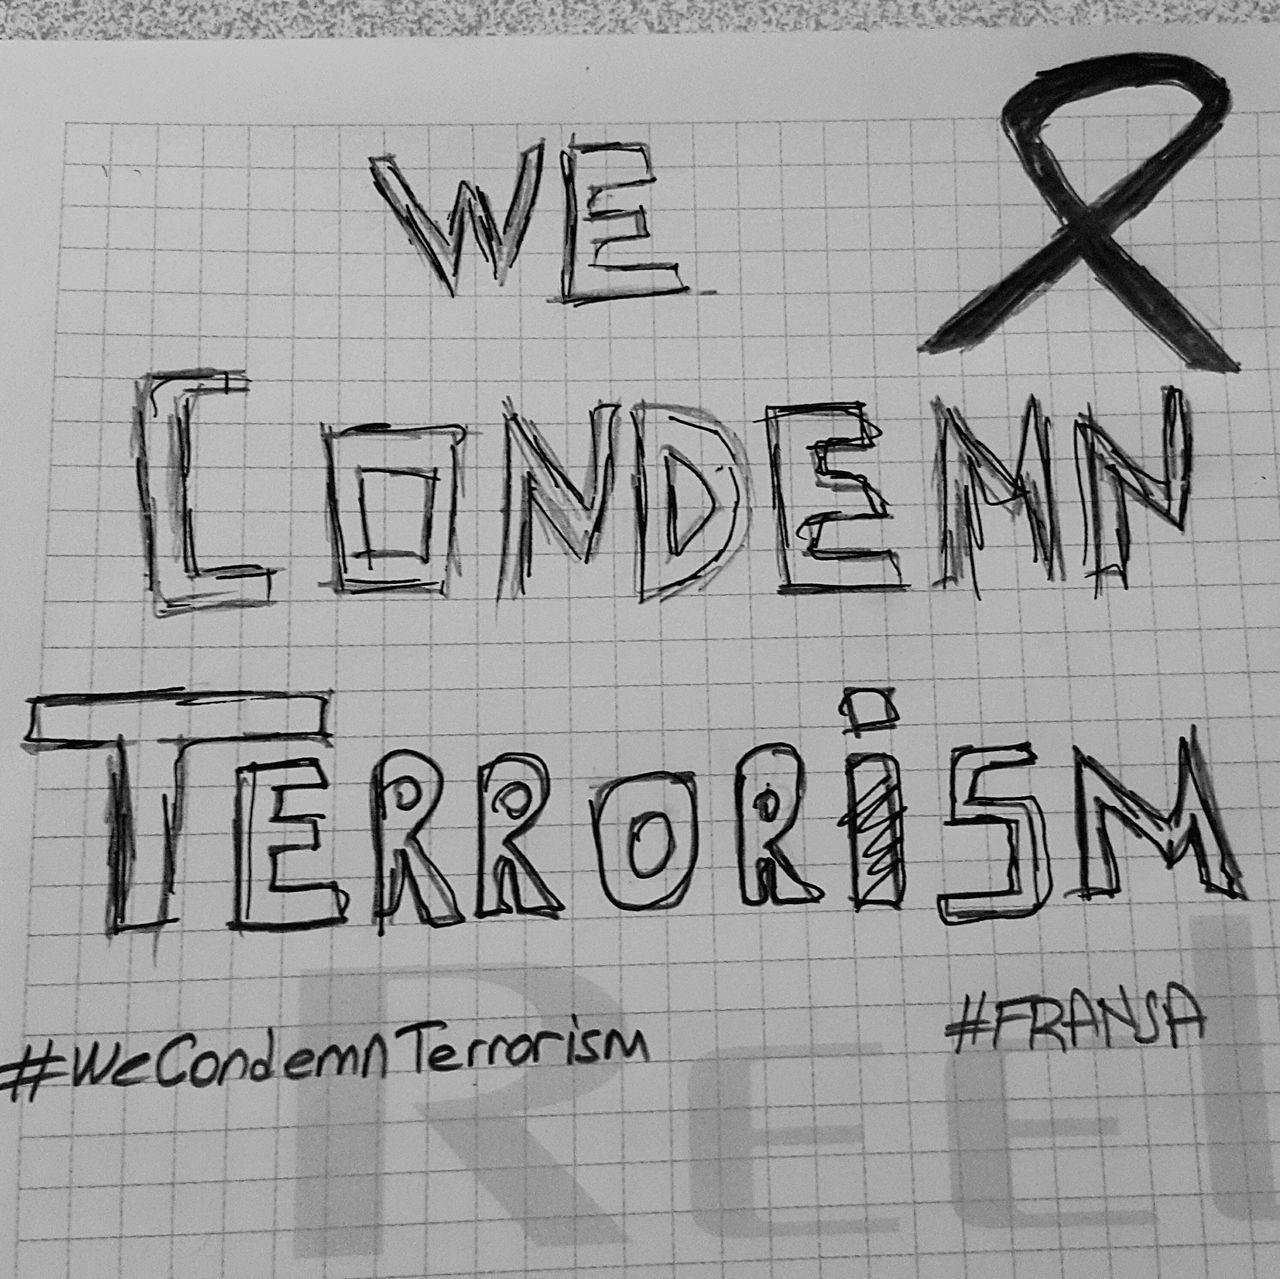 We condemn terrorism